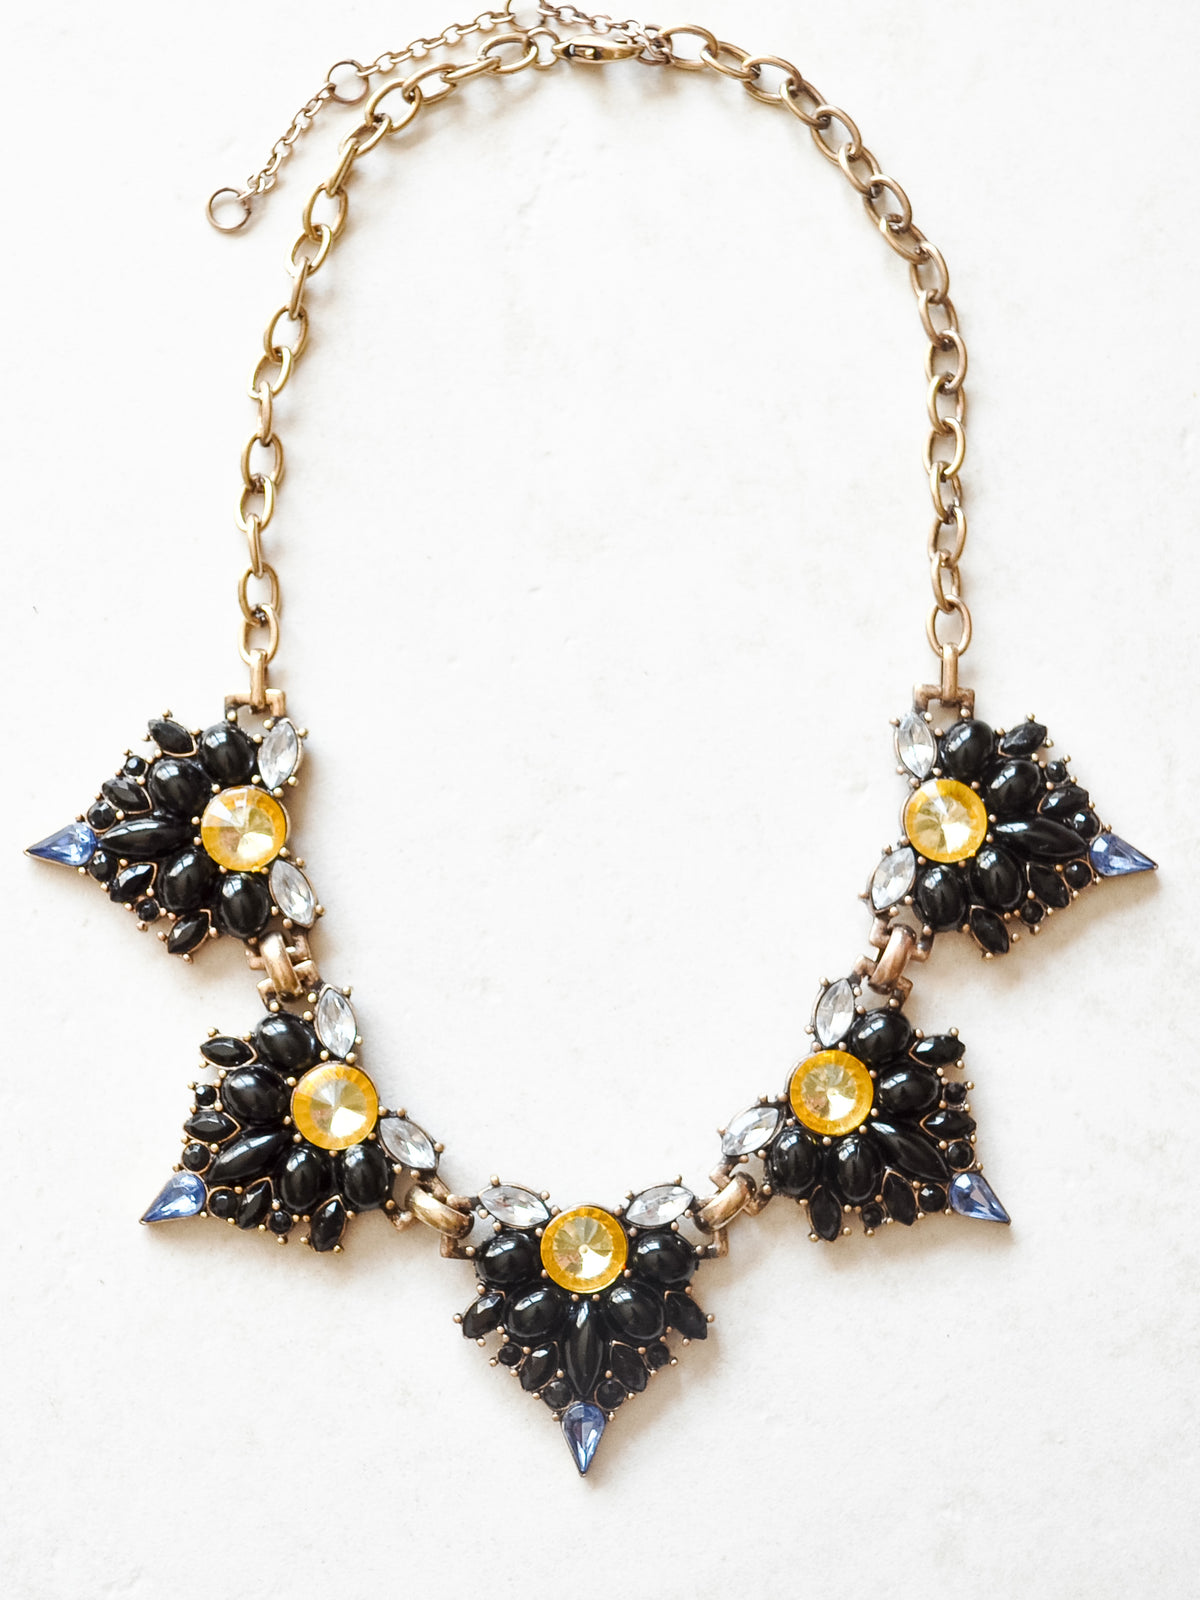 black yellow geometric work wear statement necklace